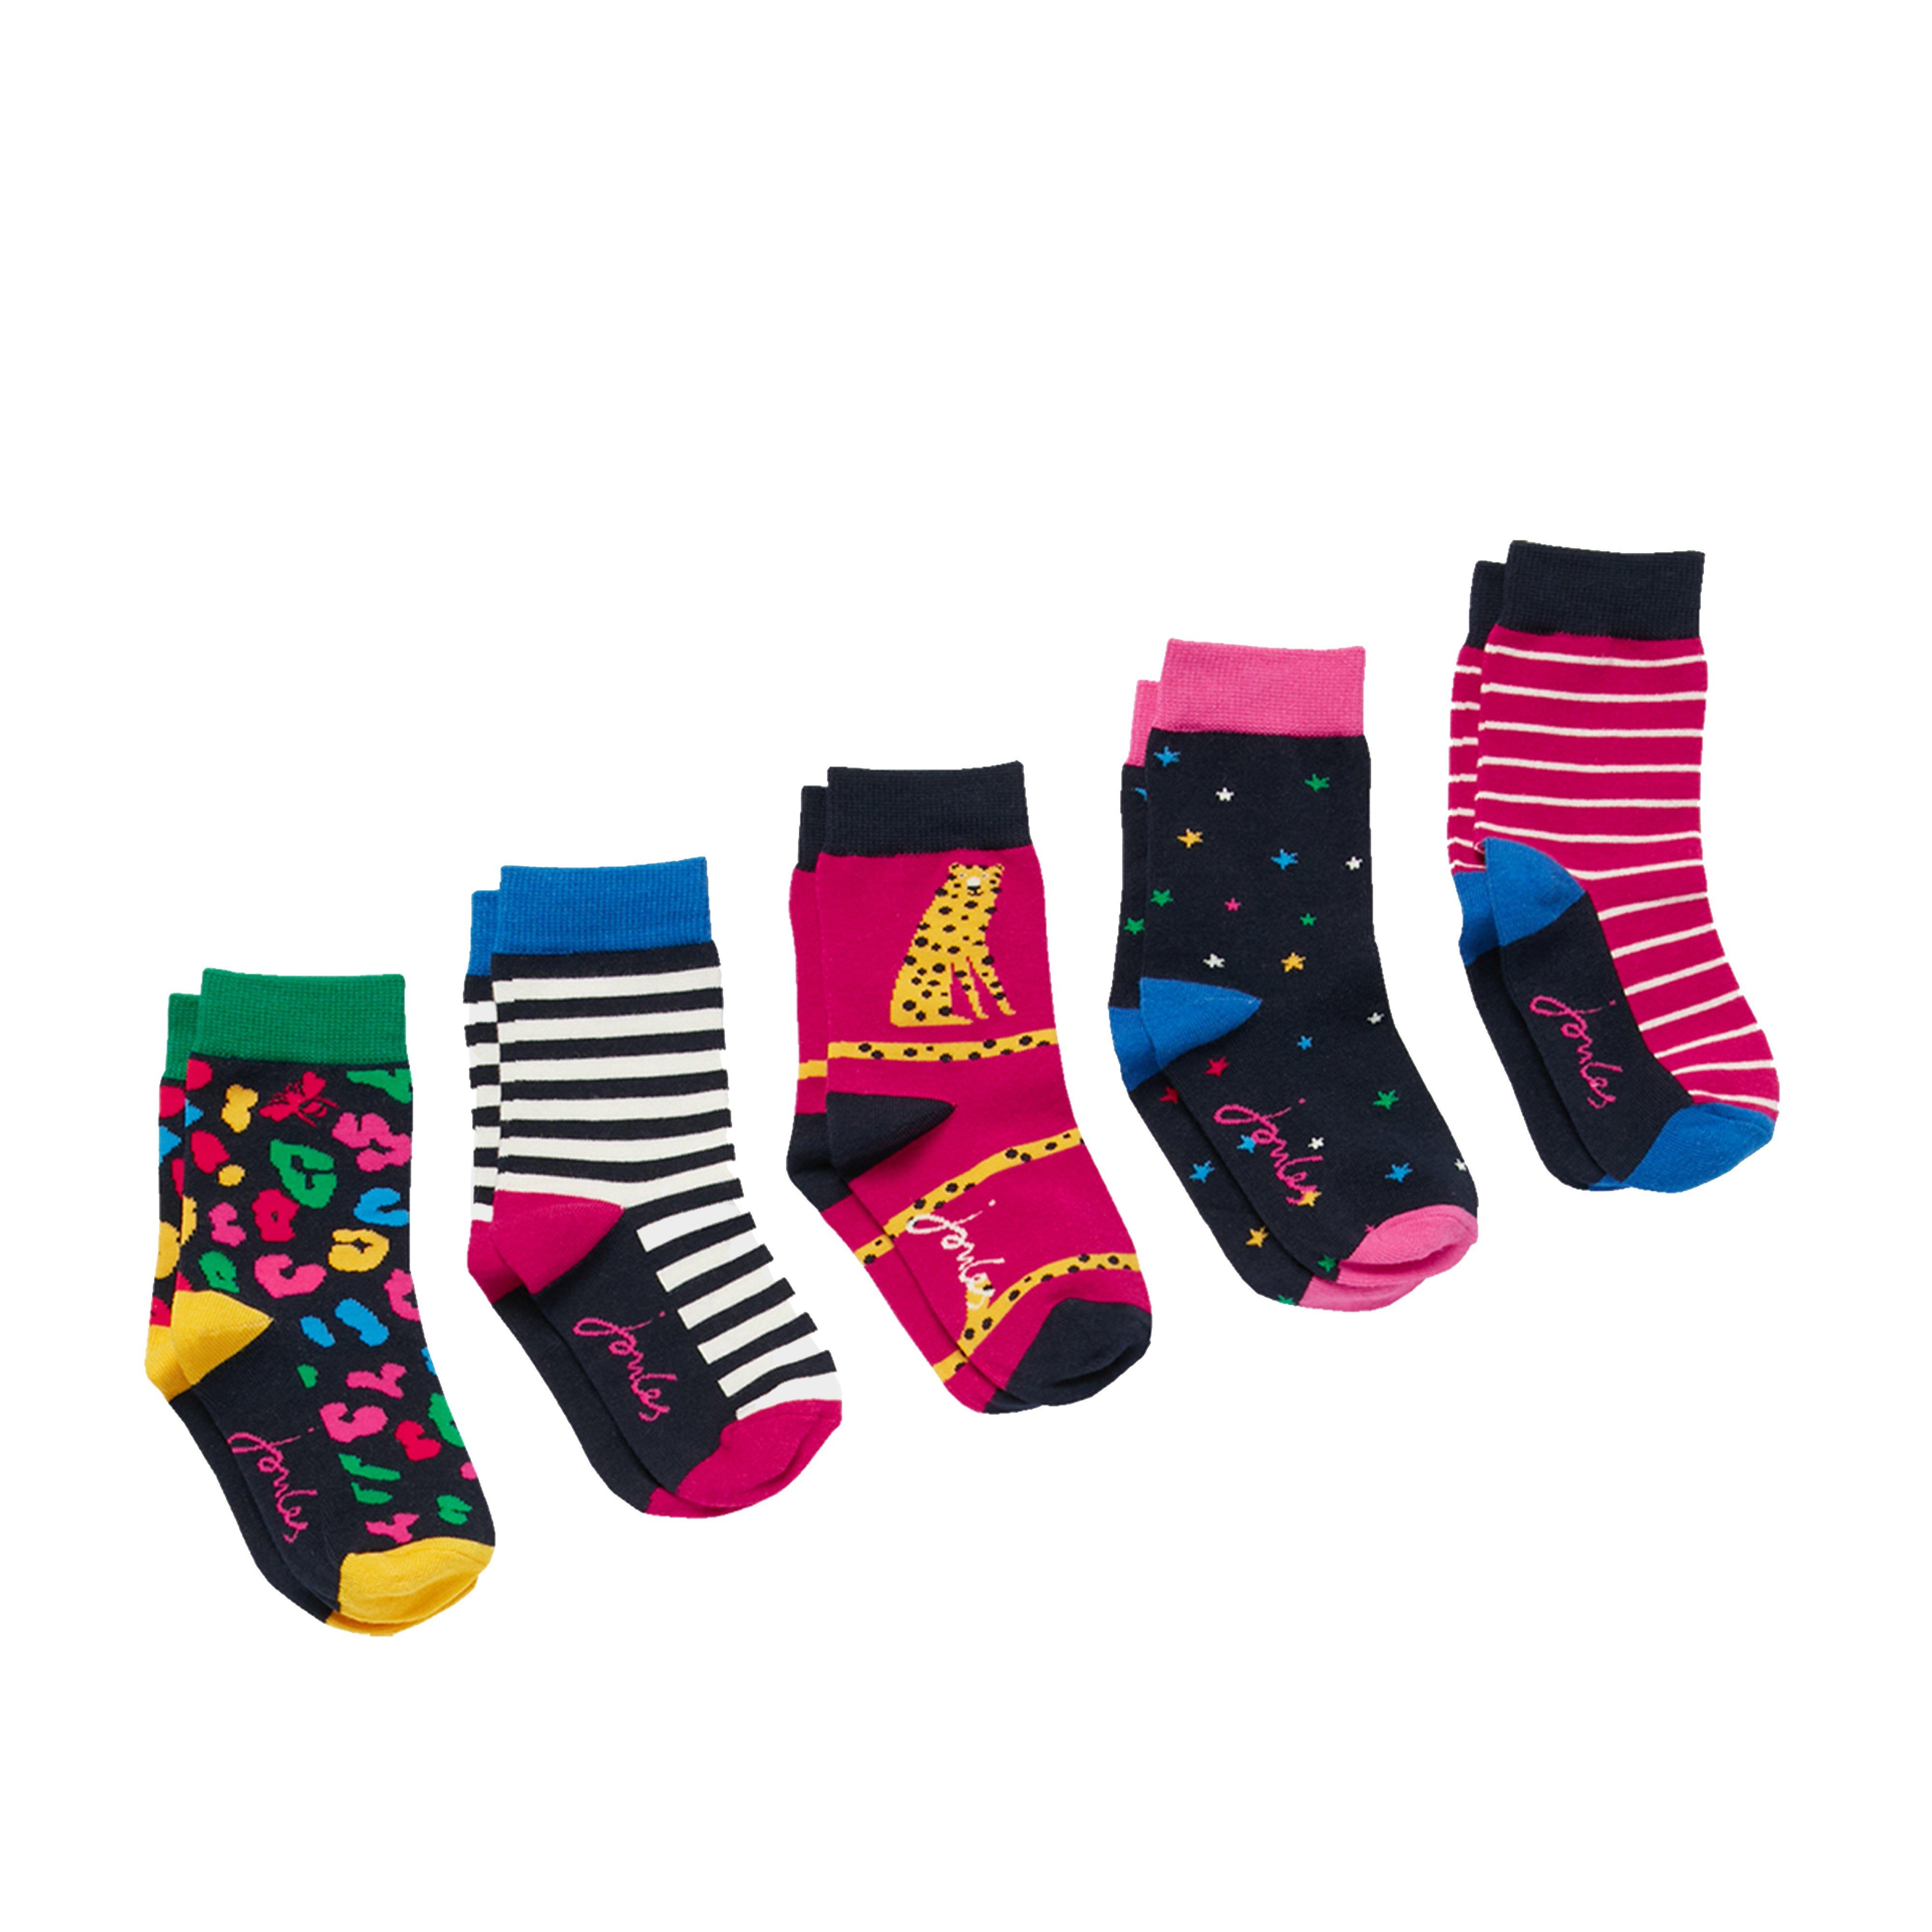 Kids’ Brill Bamboo 5 Pack Socks Pink Leopard